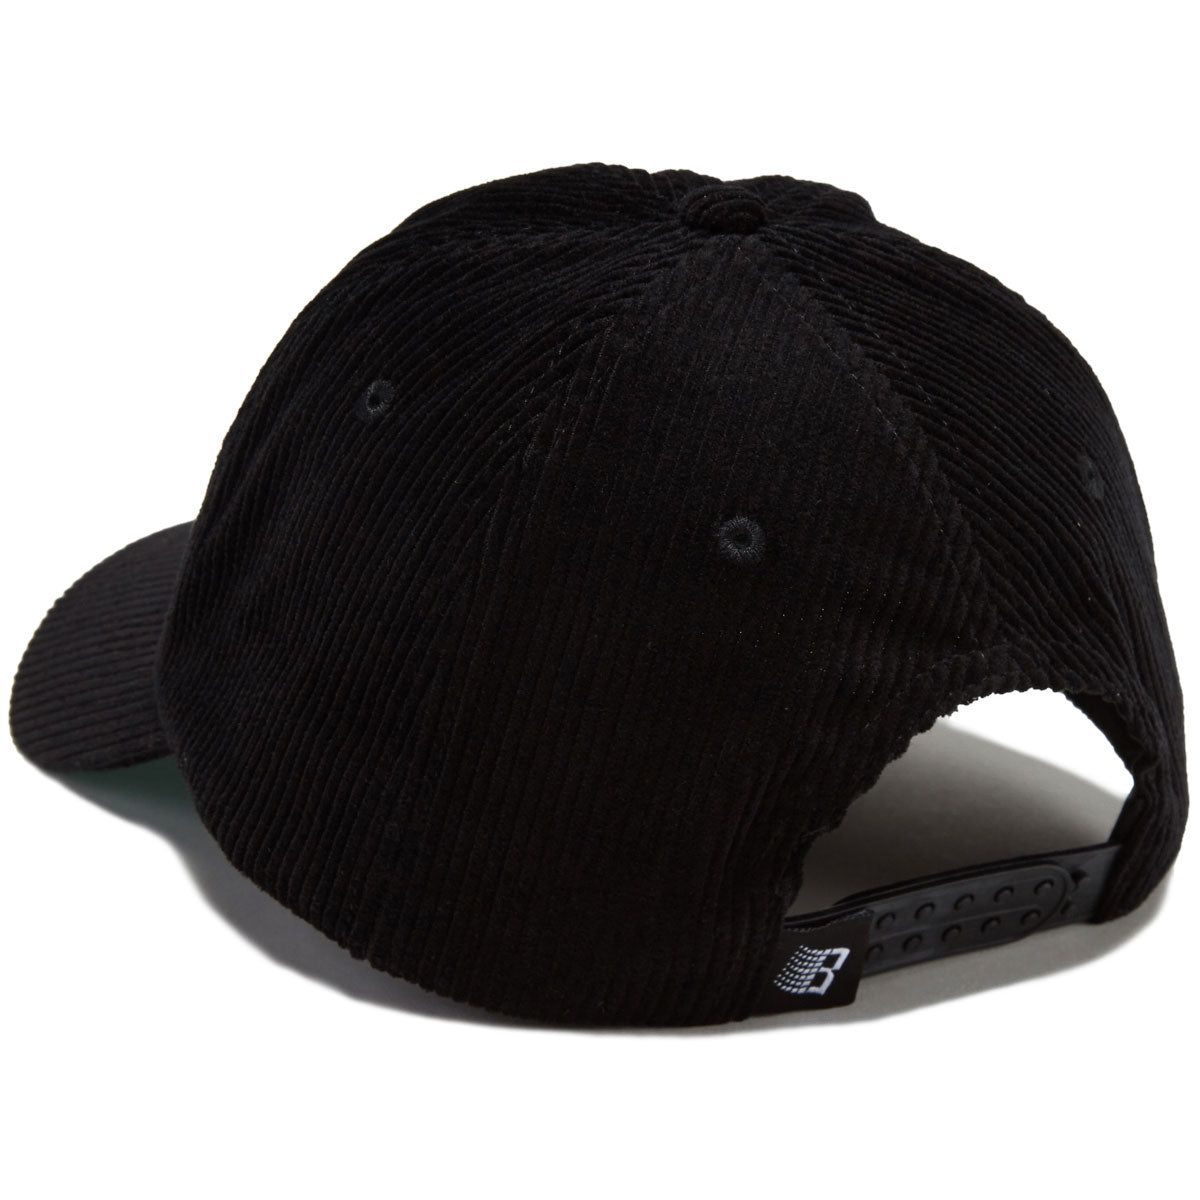 Bronze 56k Sports Cord Hat - Black image 2